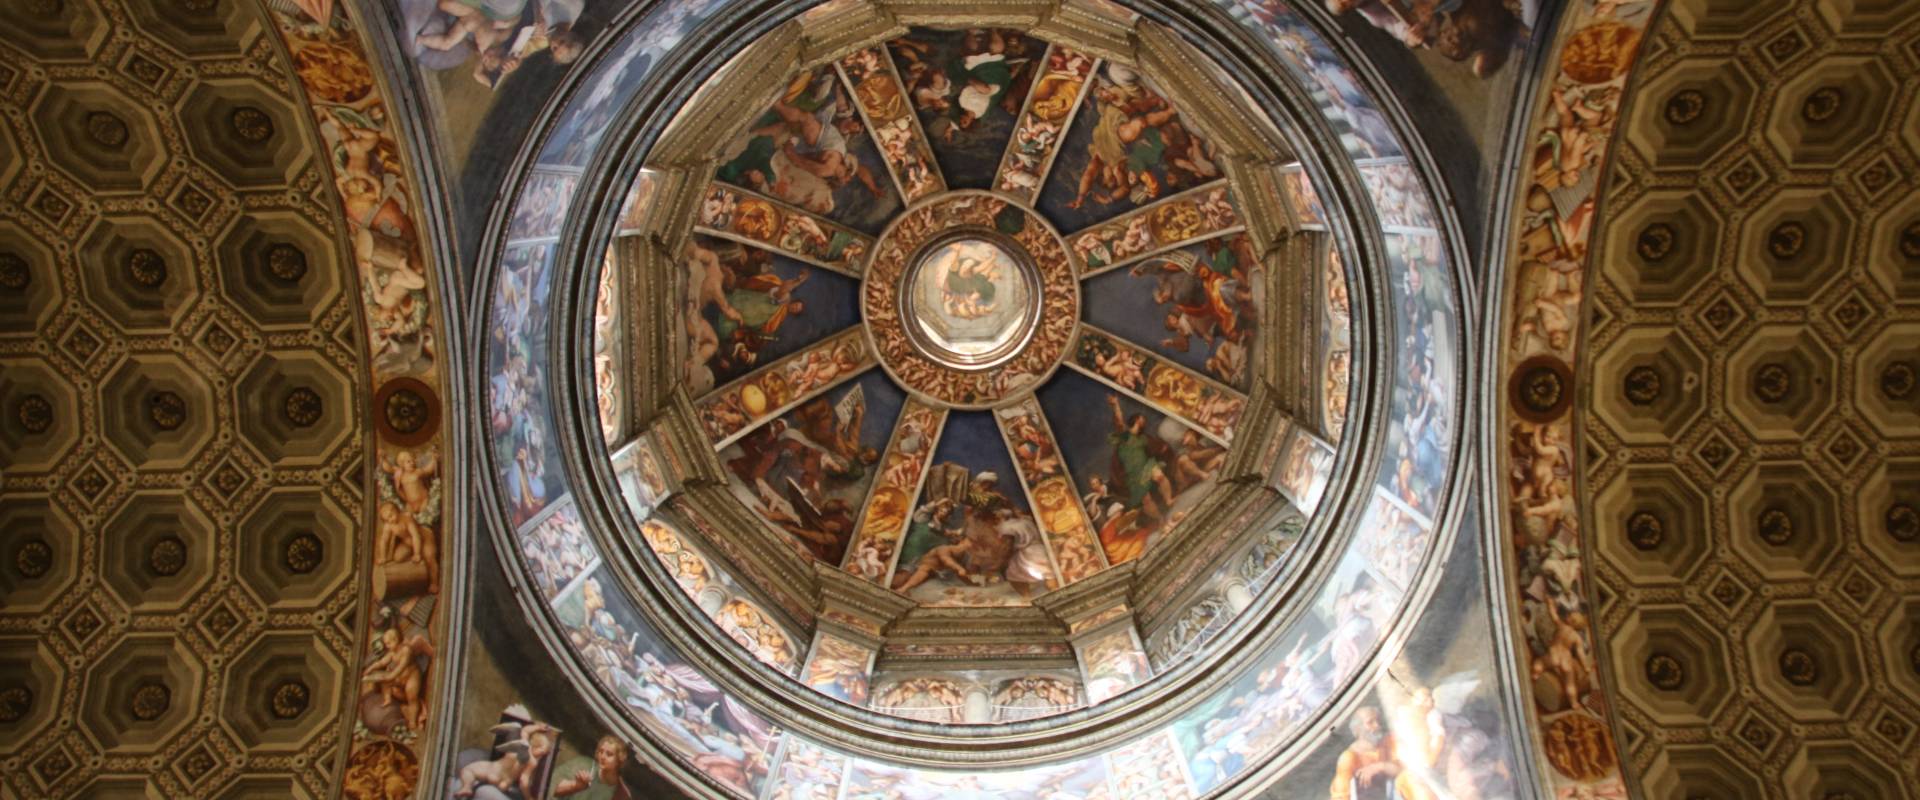 Cupola, affrescato dal Pordenone (1530) 13 photo by Mongolo1984